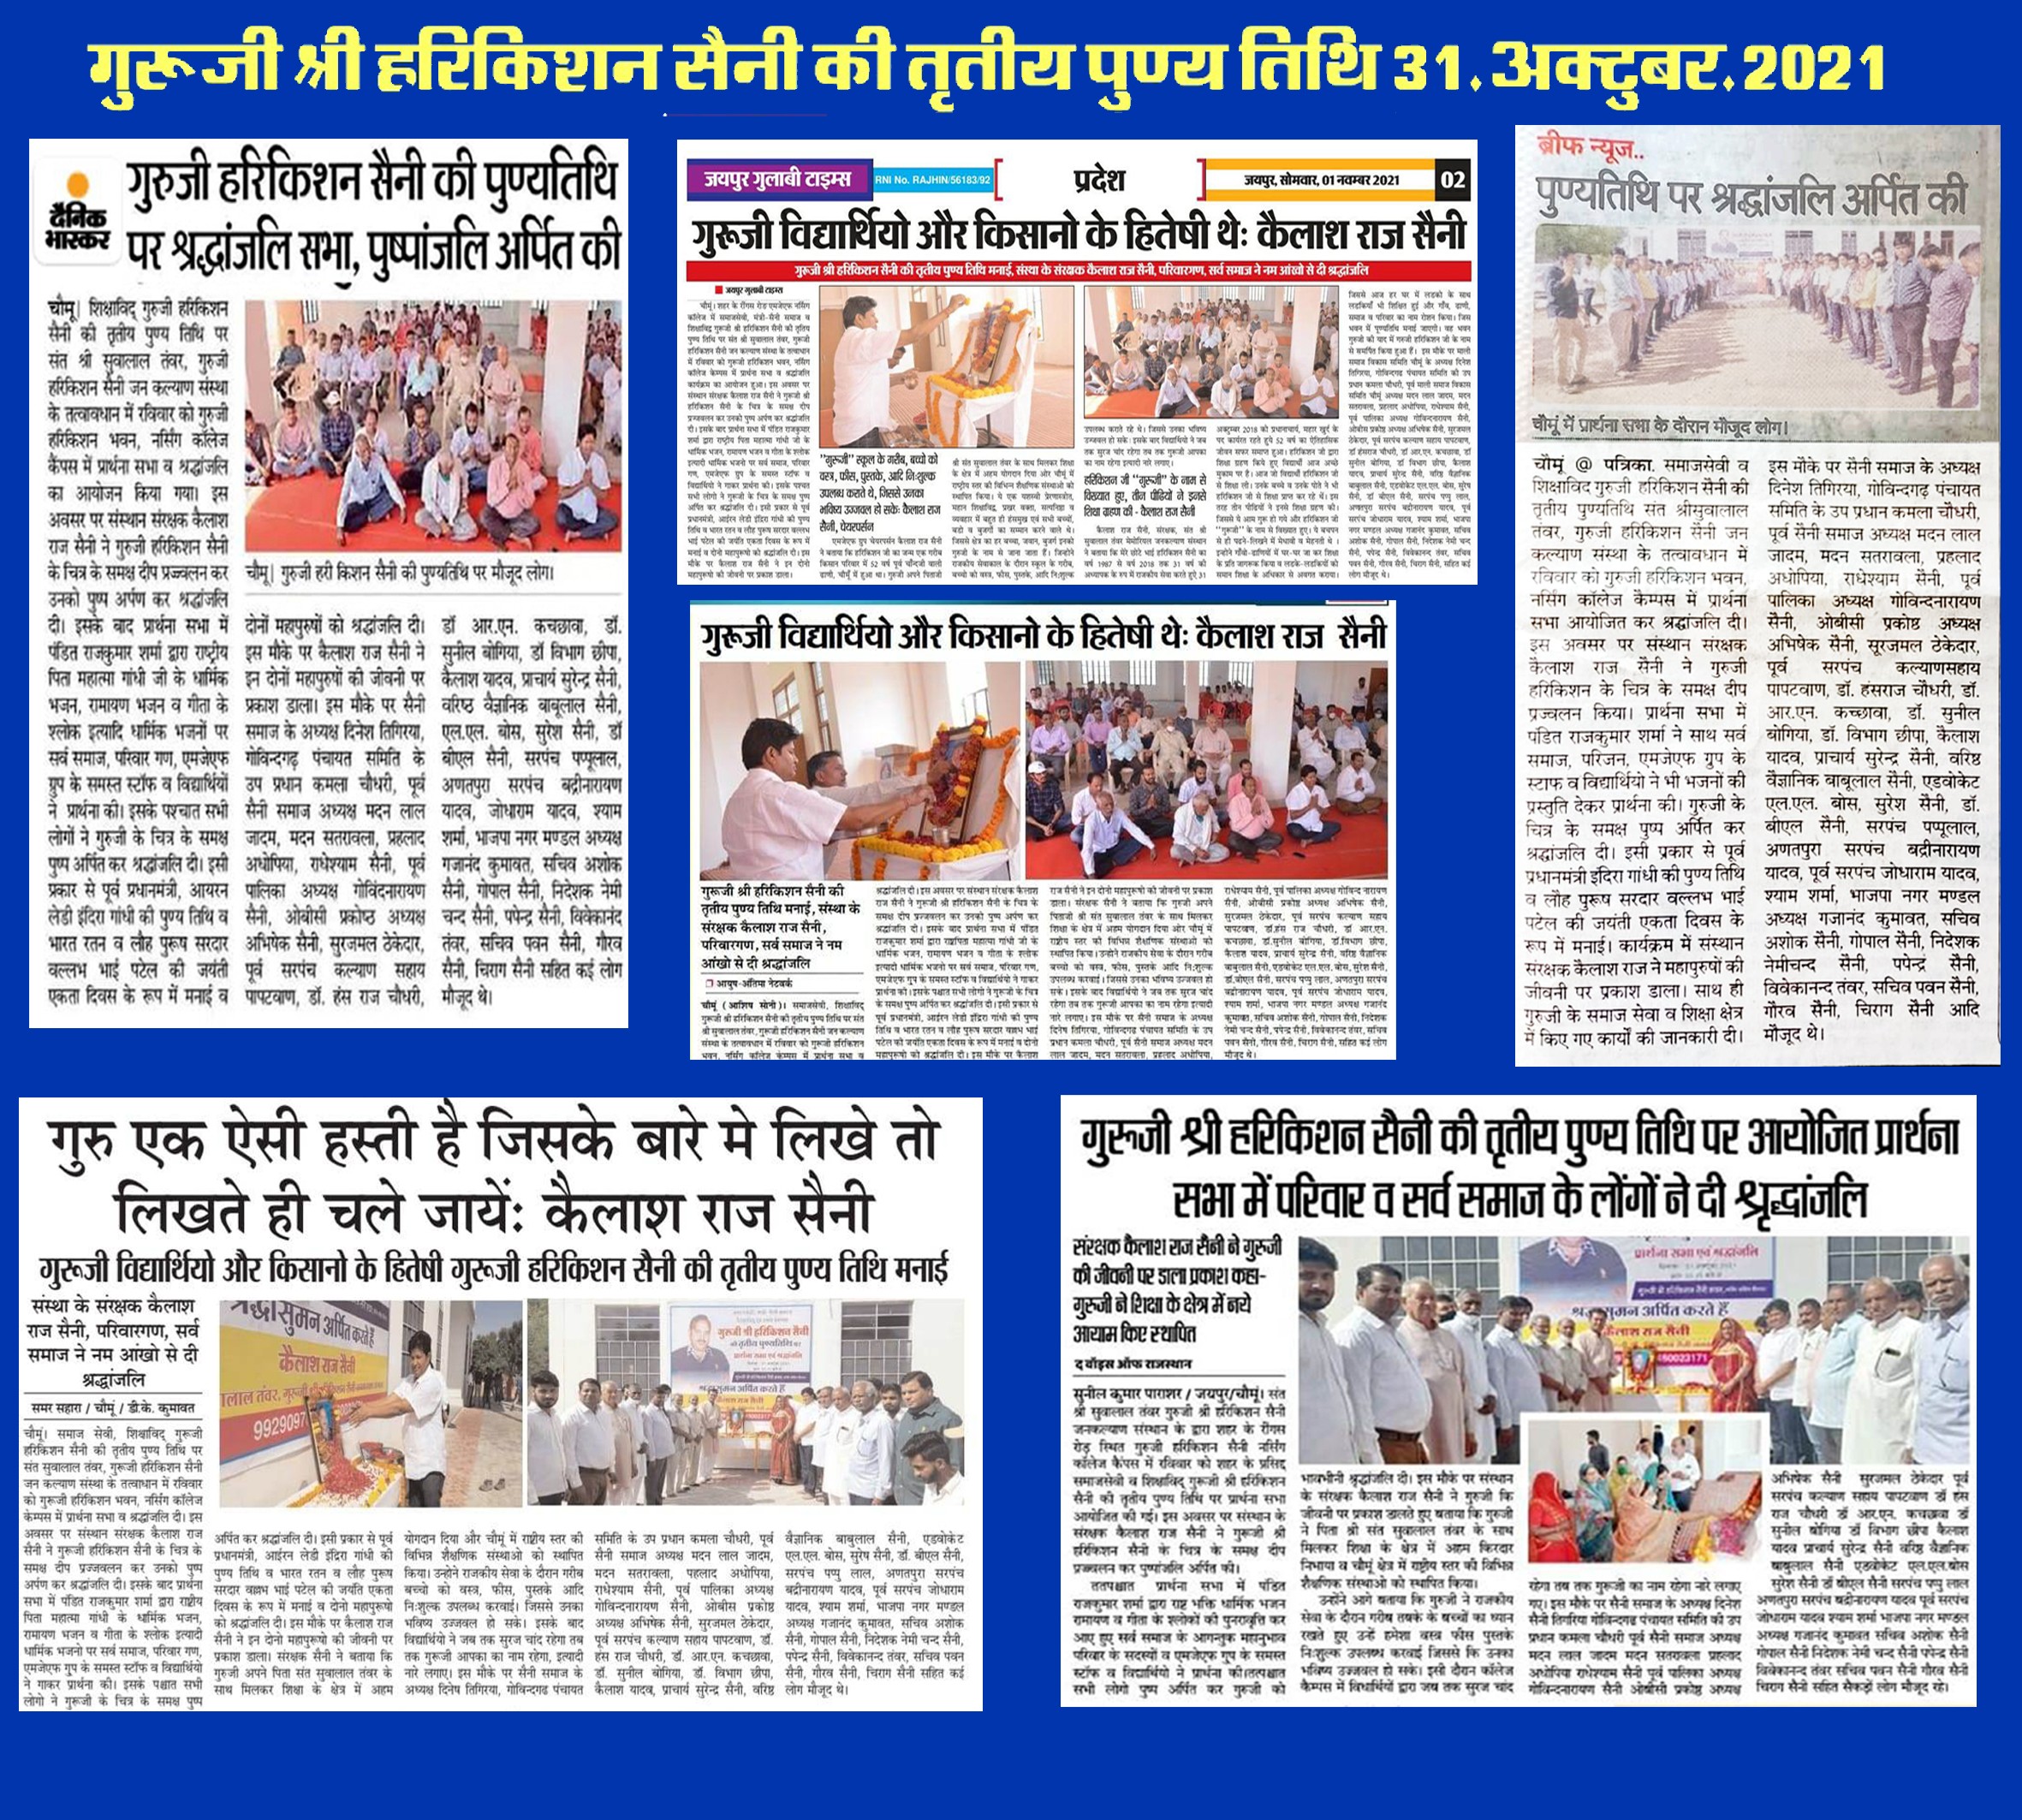 Glimpses of Newspapers Headlines the 3rd Death Anniversary of Guruji Shri Harikishan on 31-10-2021